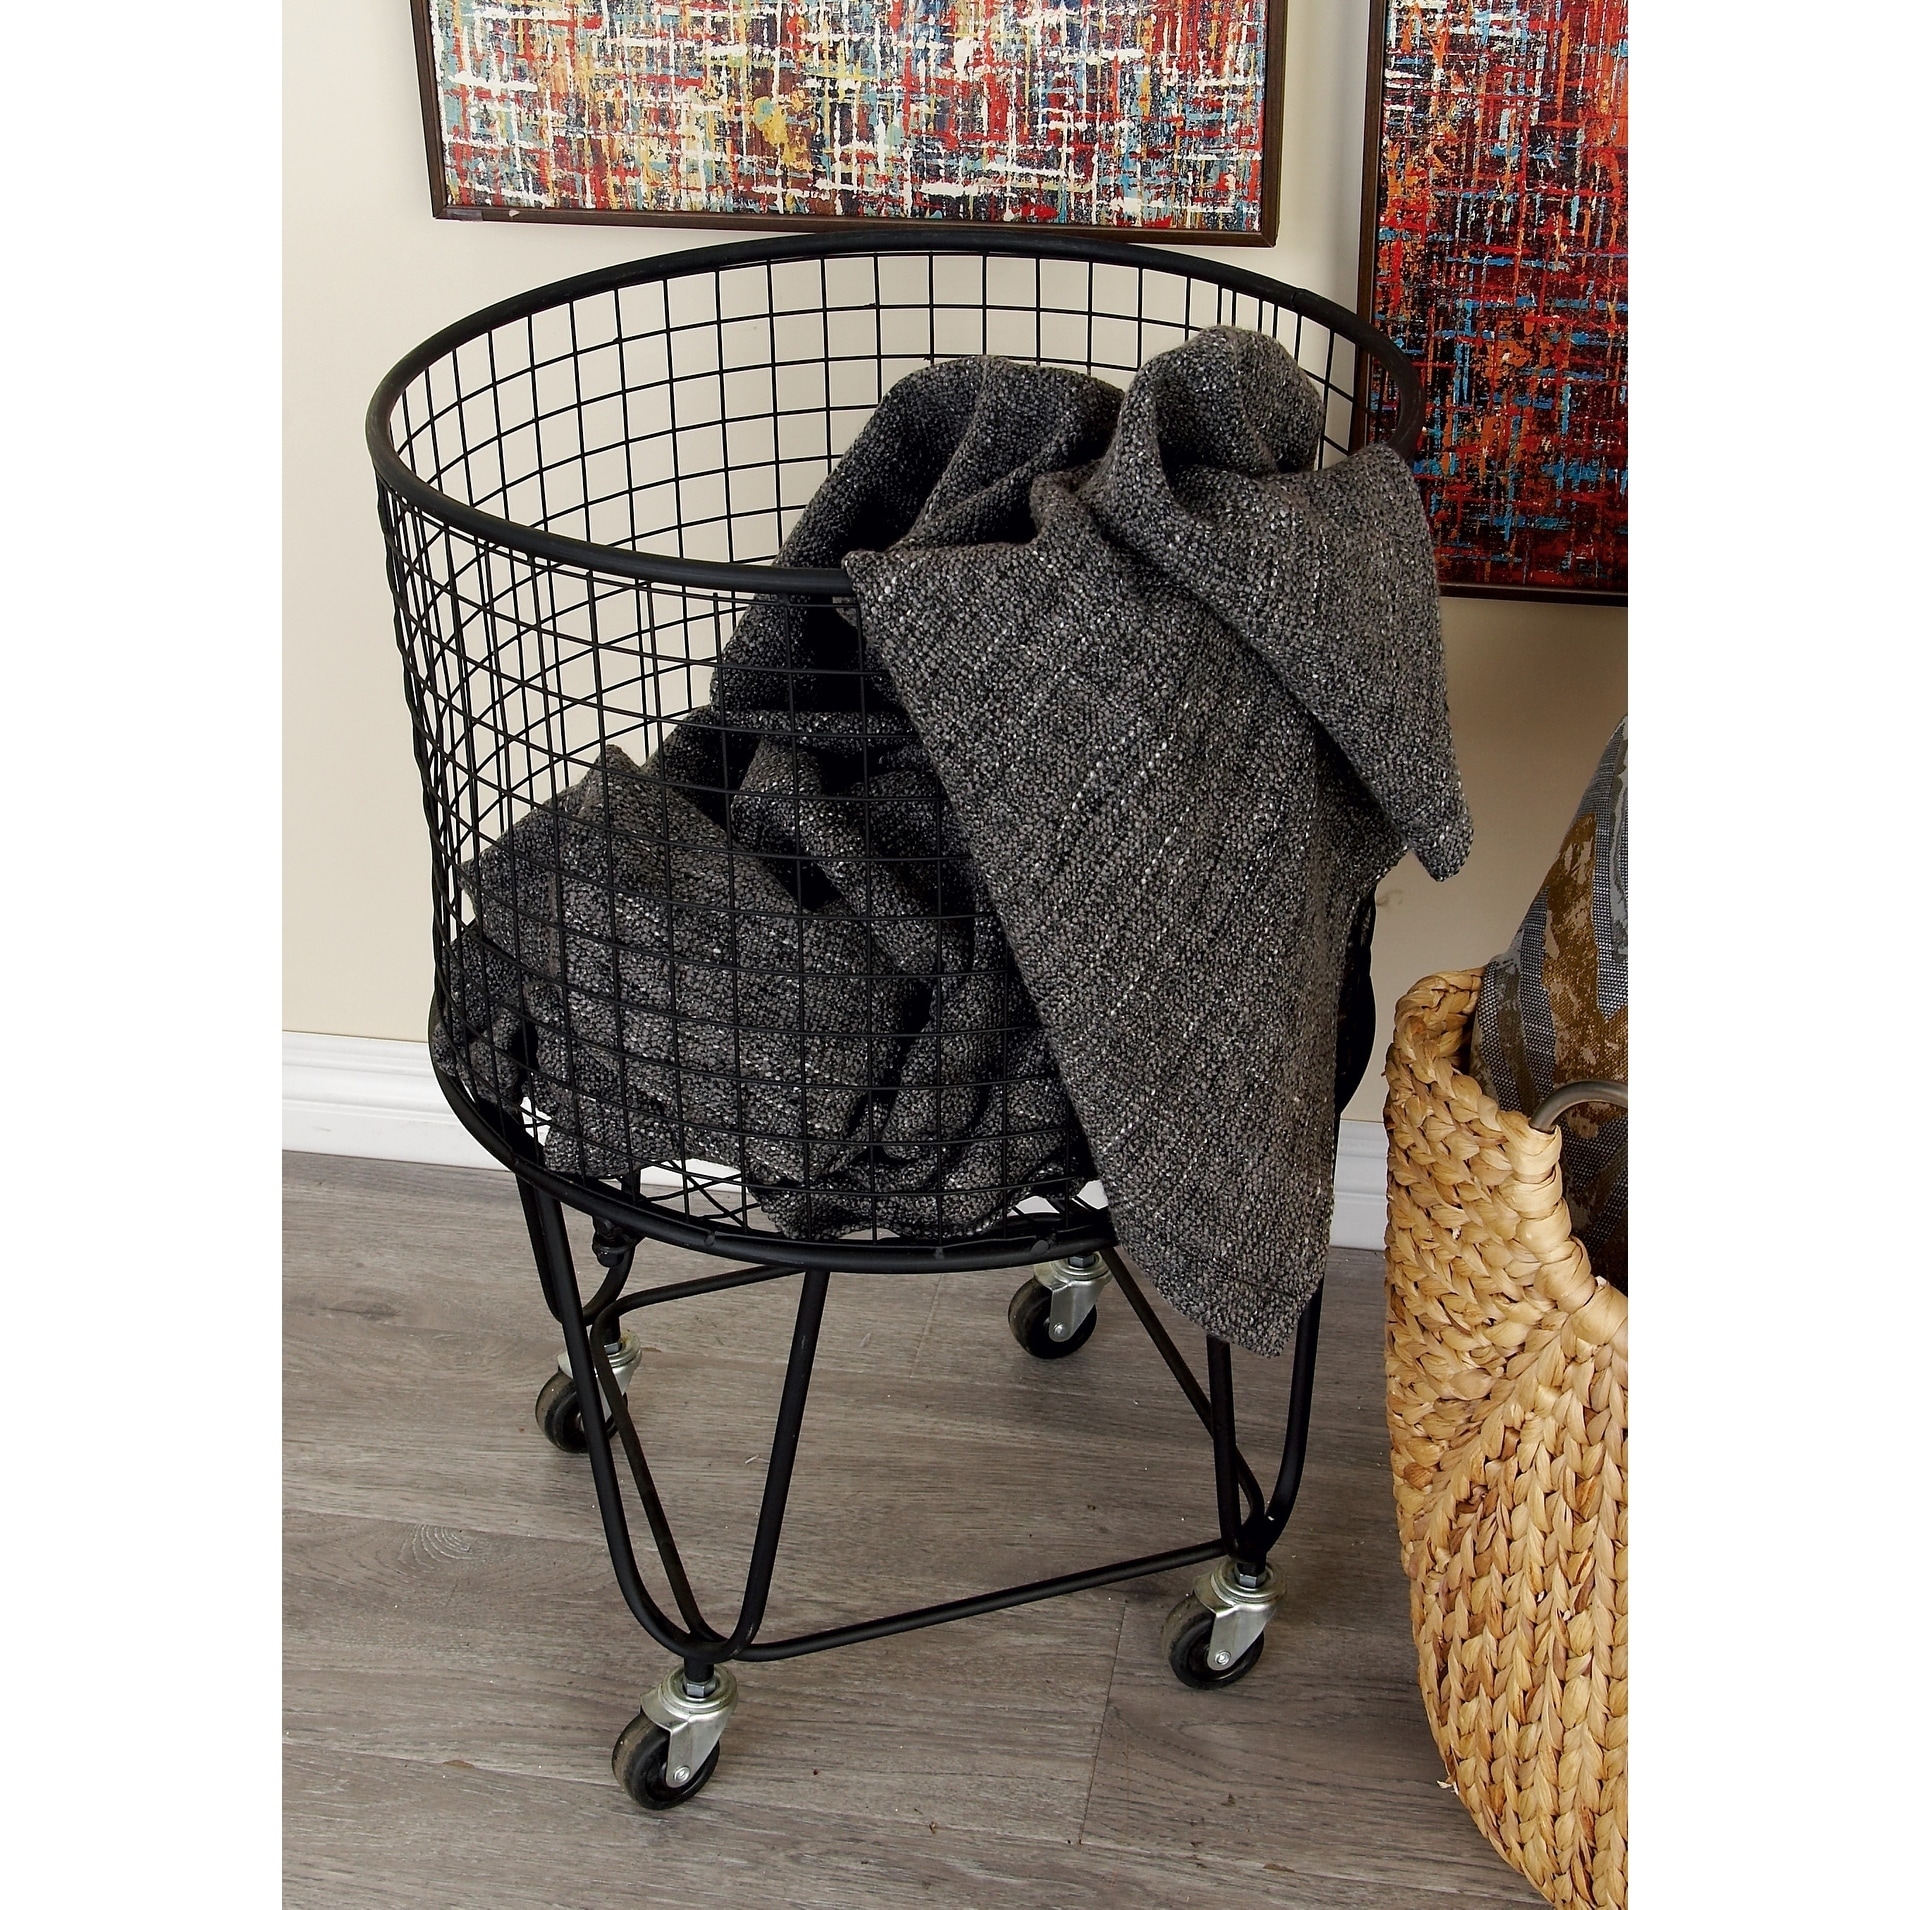 metal laundry basket